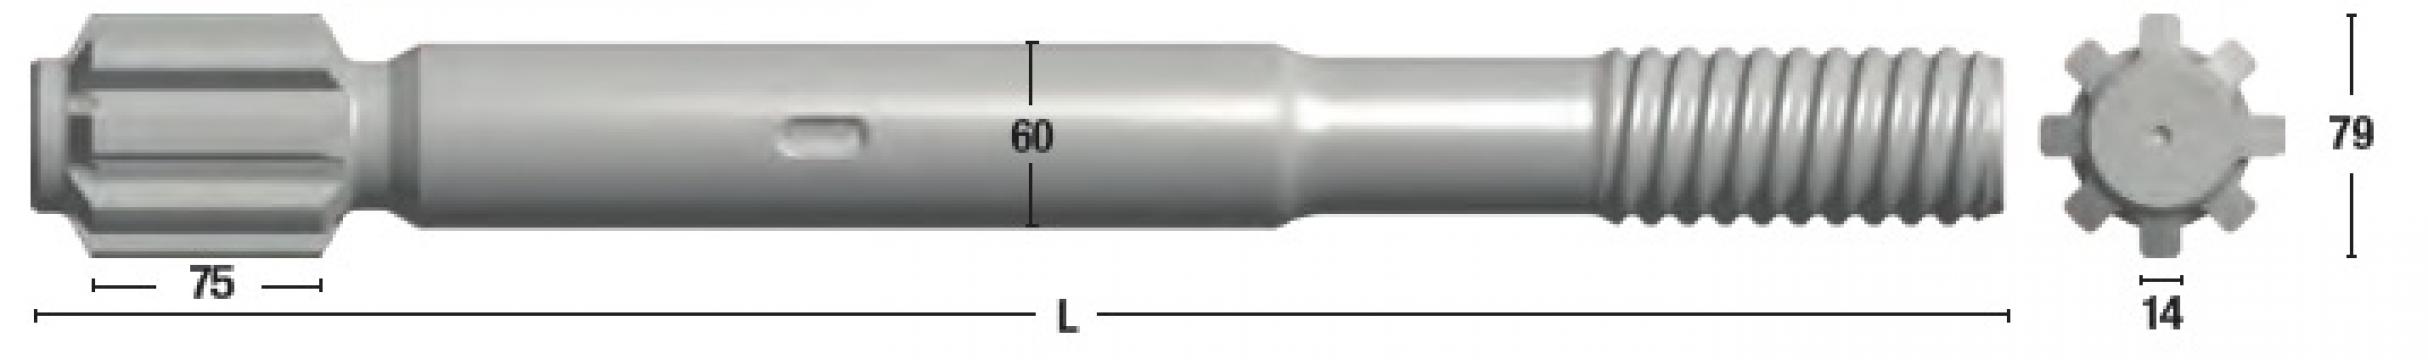 Adaptor pentru Sandvik HL1000, filet GT60, corp 60mm